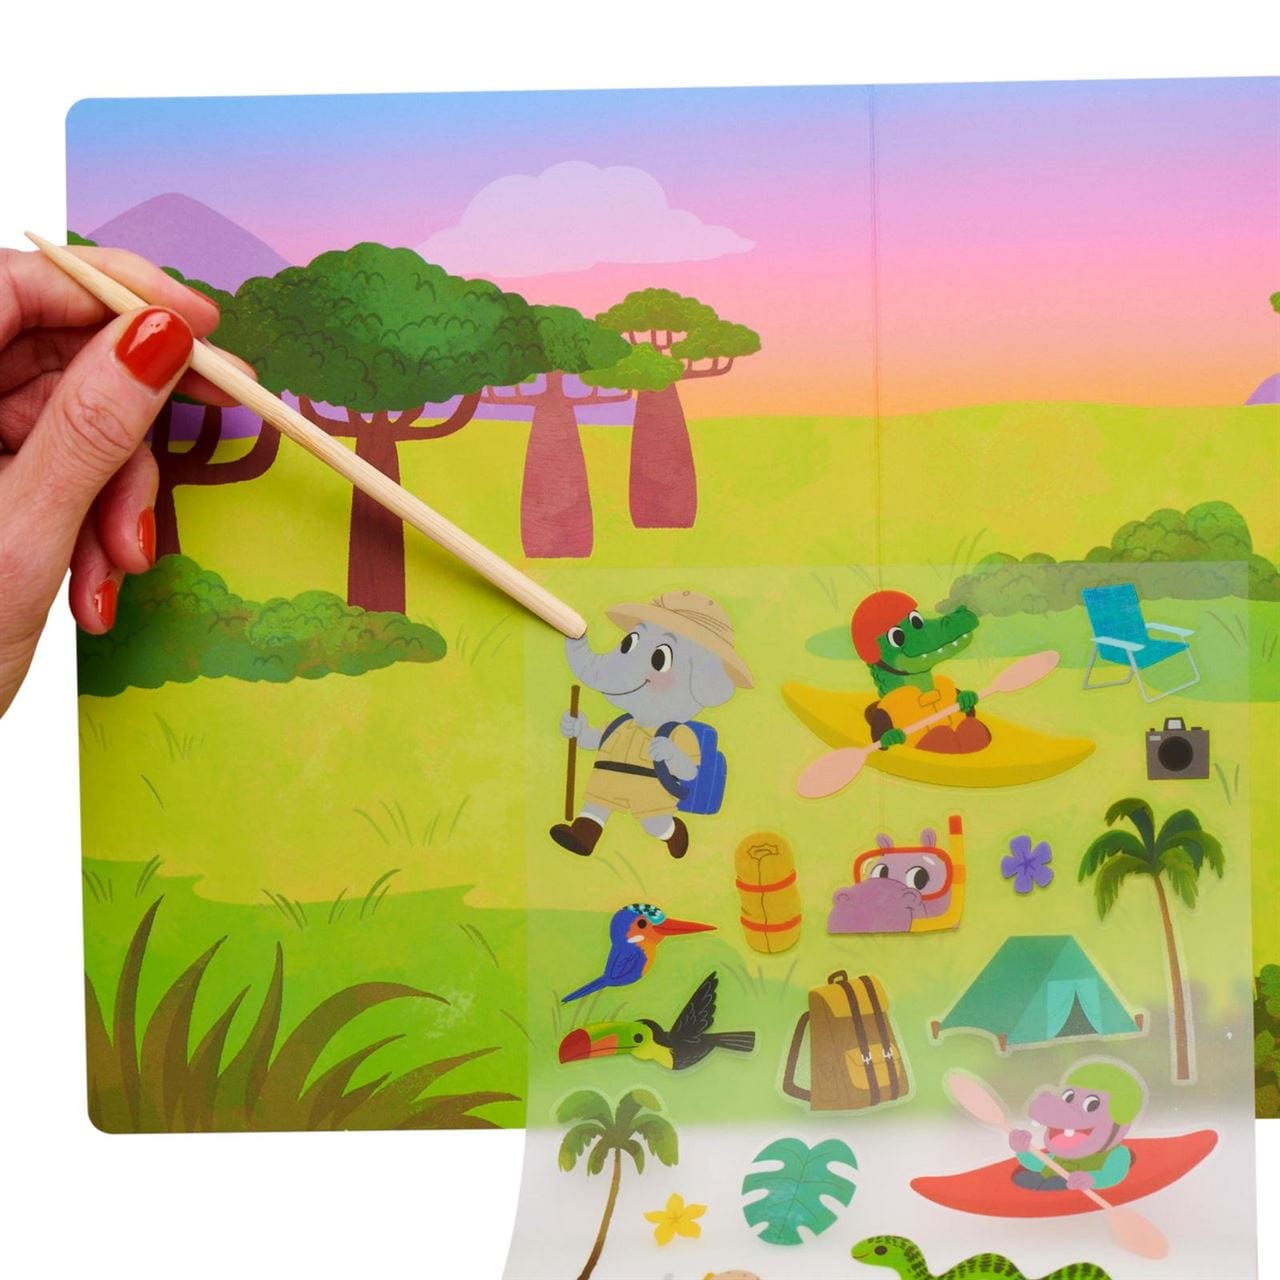 Ooly Toys Jungle Adventure  - Set The Scene Transfer Stick Magic